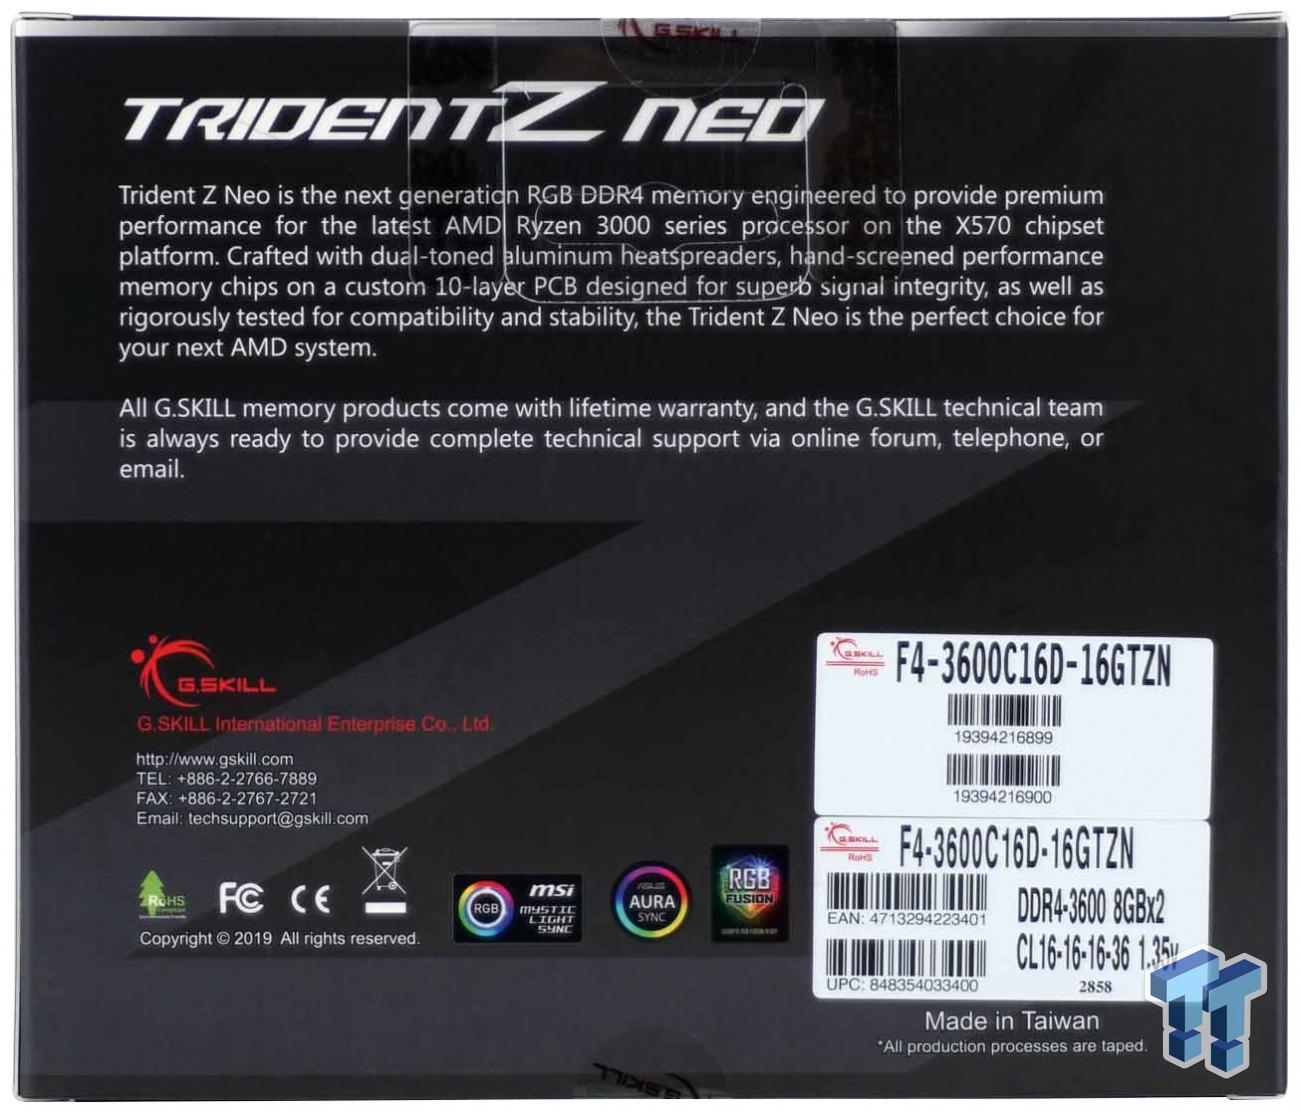 G.SKILL TridentZ NEO DDR4-3600 16GB Dual-Channel Memory Kit Review 